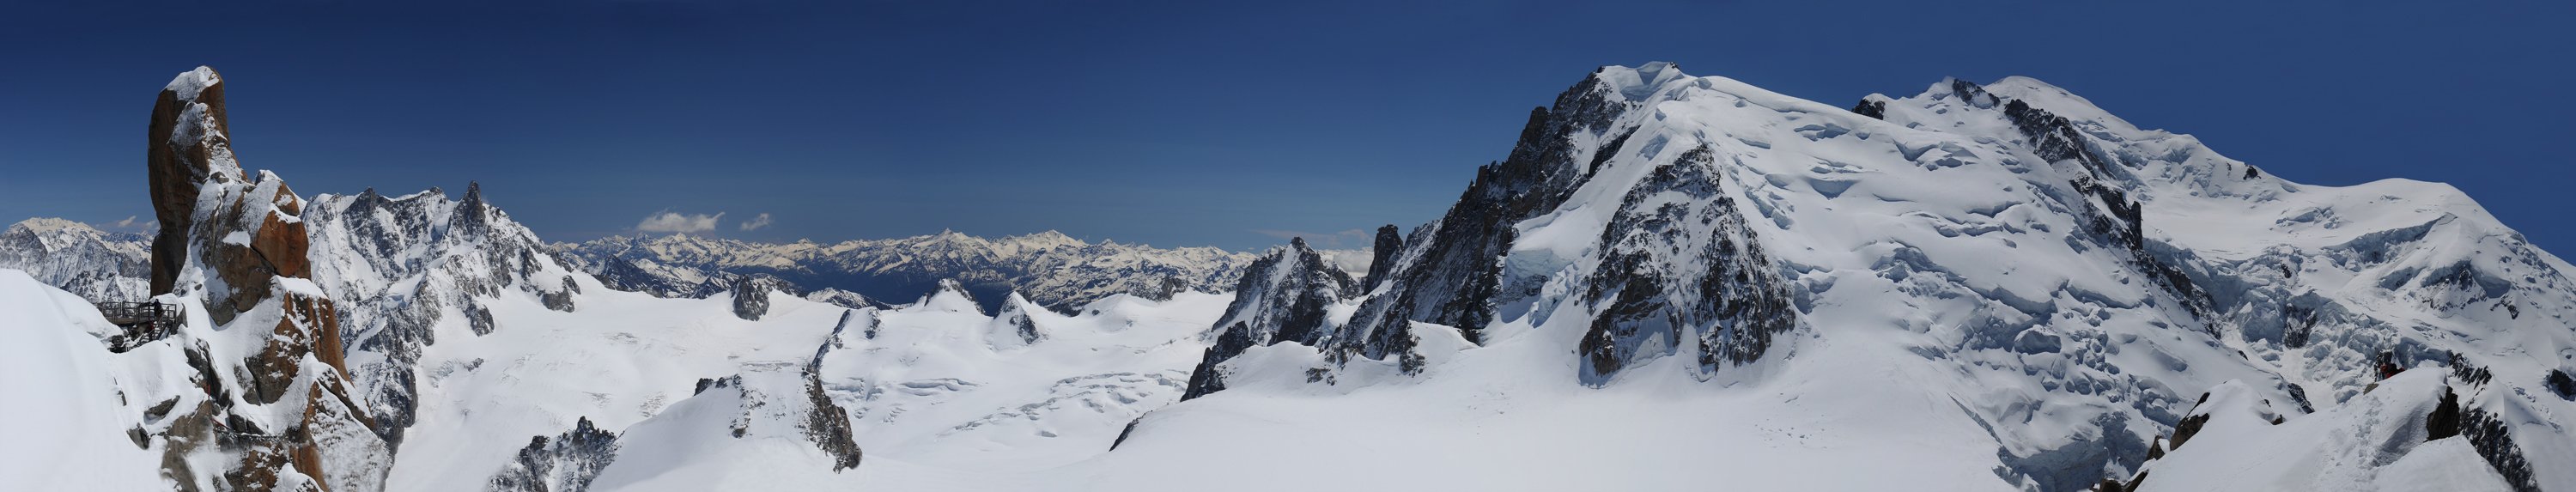 Alpes, Alps, Chamonix, Climb, Climbing, France, Guide, Italy, Landscape, Mont Blanc, Mountain, Mountains, Sommet, Summit, Tourist, Valley, View, Tomek Jungowski